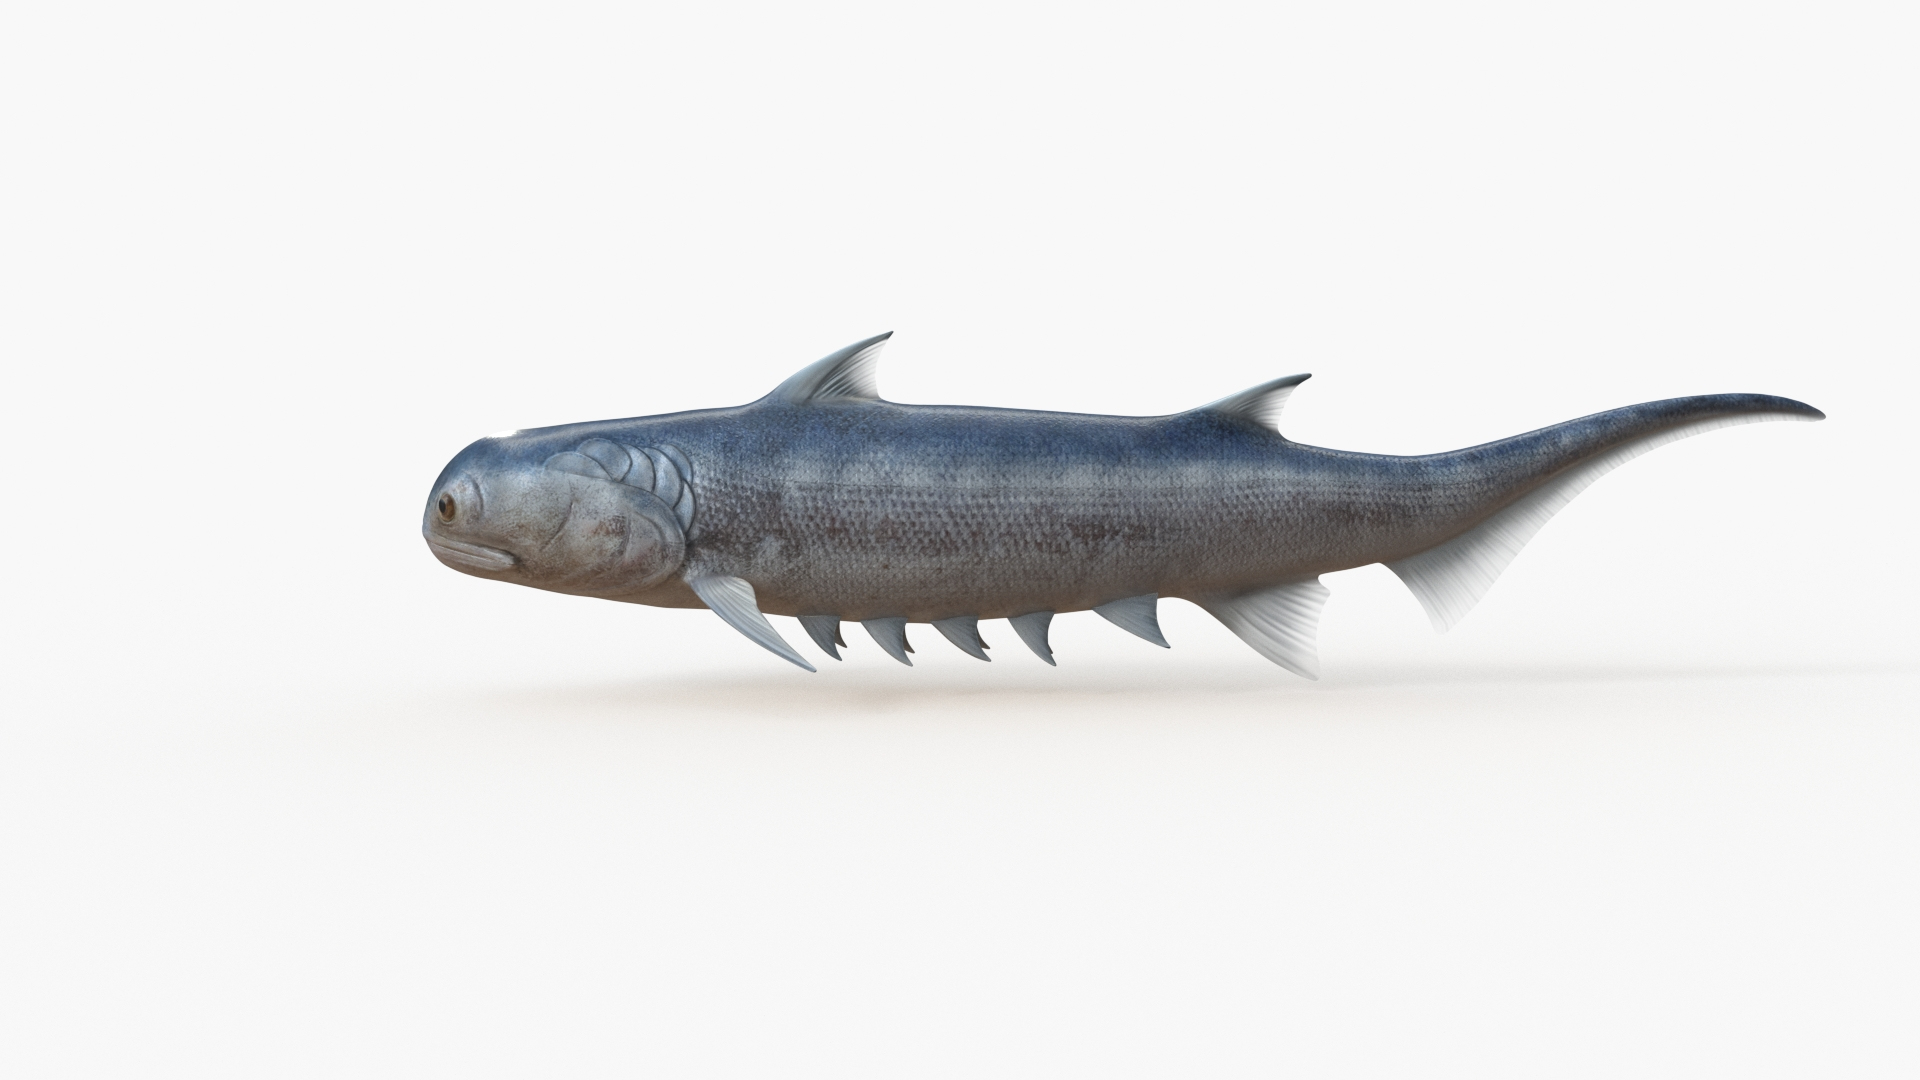 3D Acanthodii fish https://p.turbosquid.com/ts-thumb/9x/MFoh1w/2A/rotate/jpg/1621330031/1920x1080/turn_fit_q99/07ce19256ef4e87bbb41425a0a3e3d3a4de48918/rotate-1.jpg